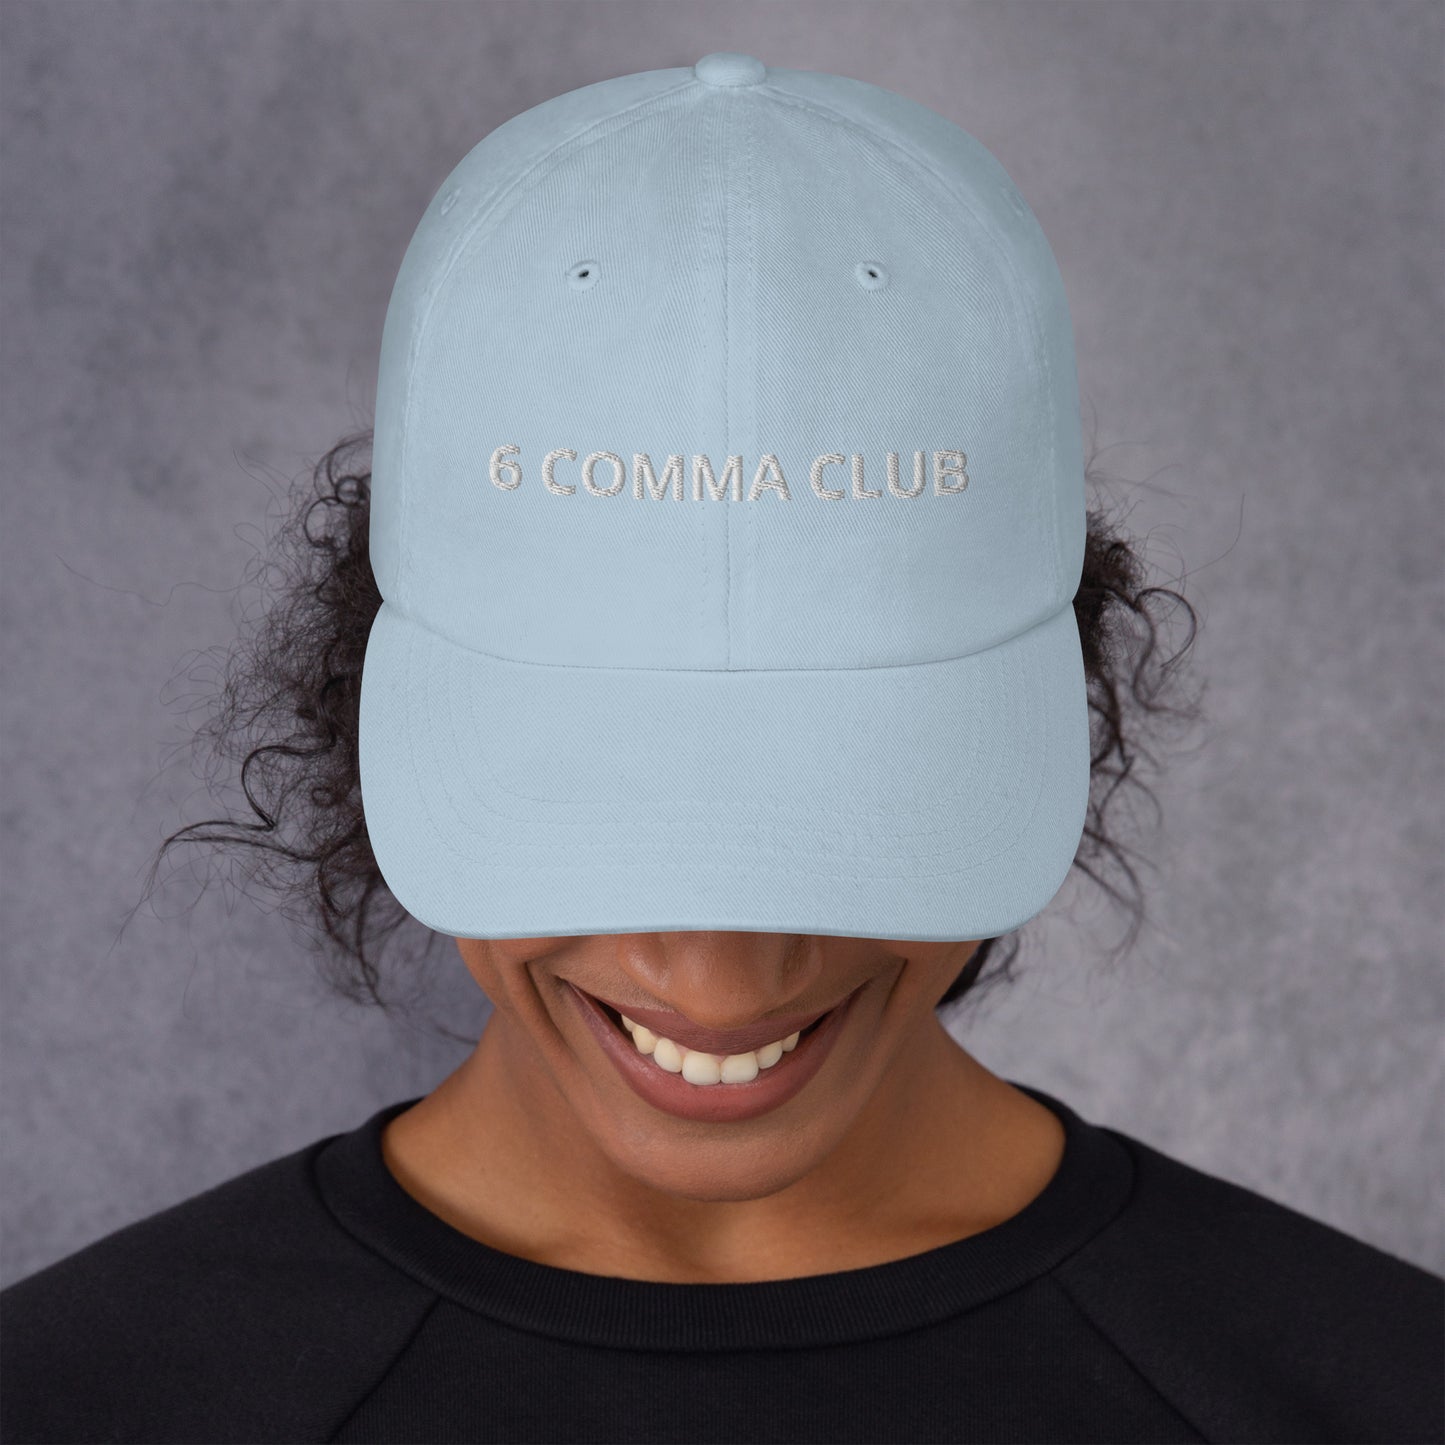 6 COMMA CLUB  hat